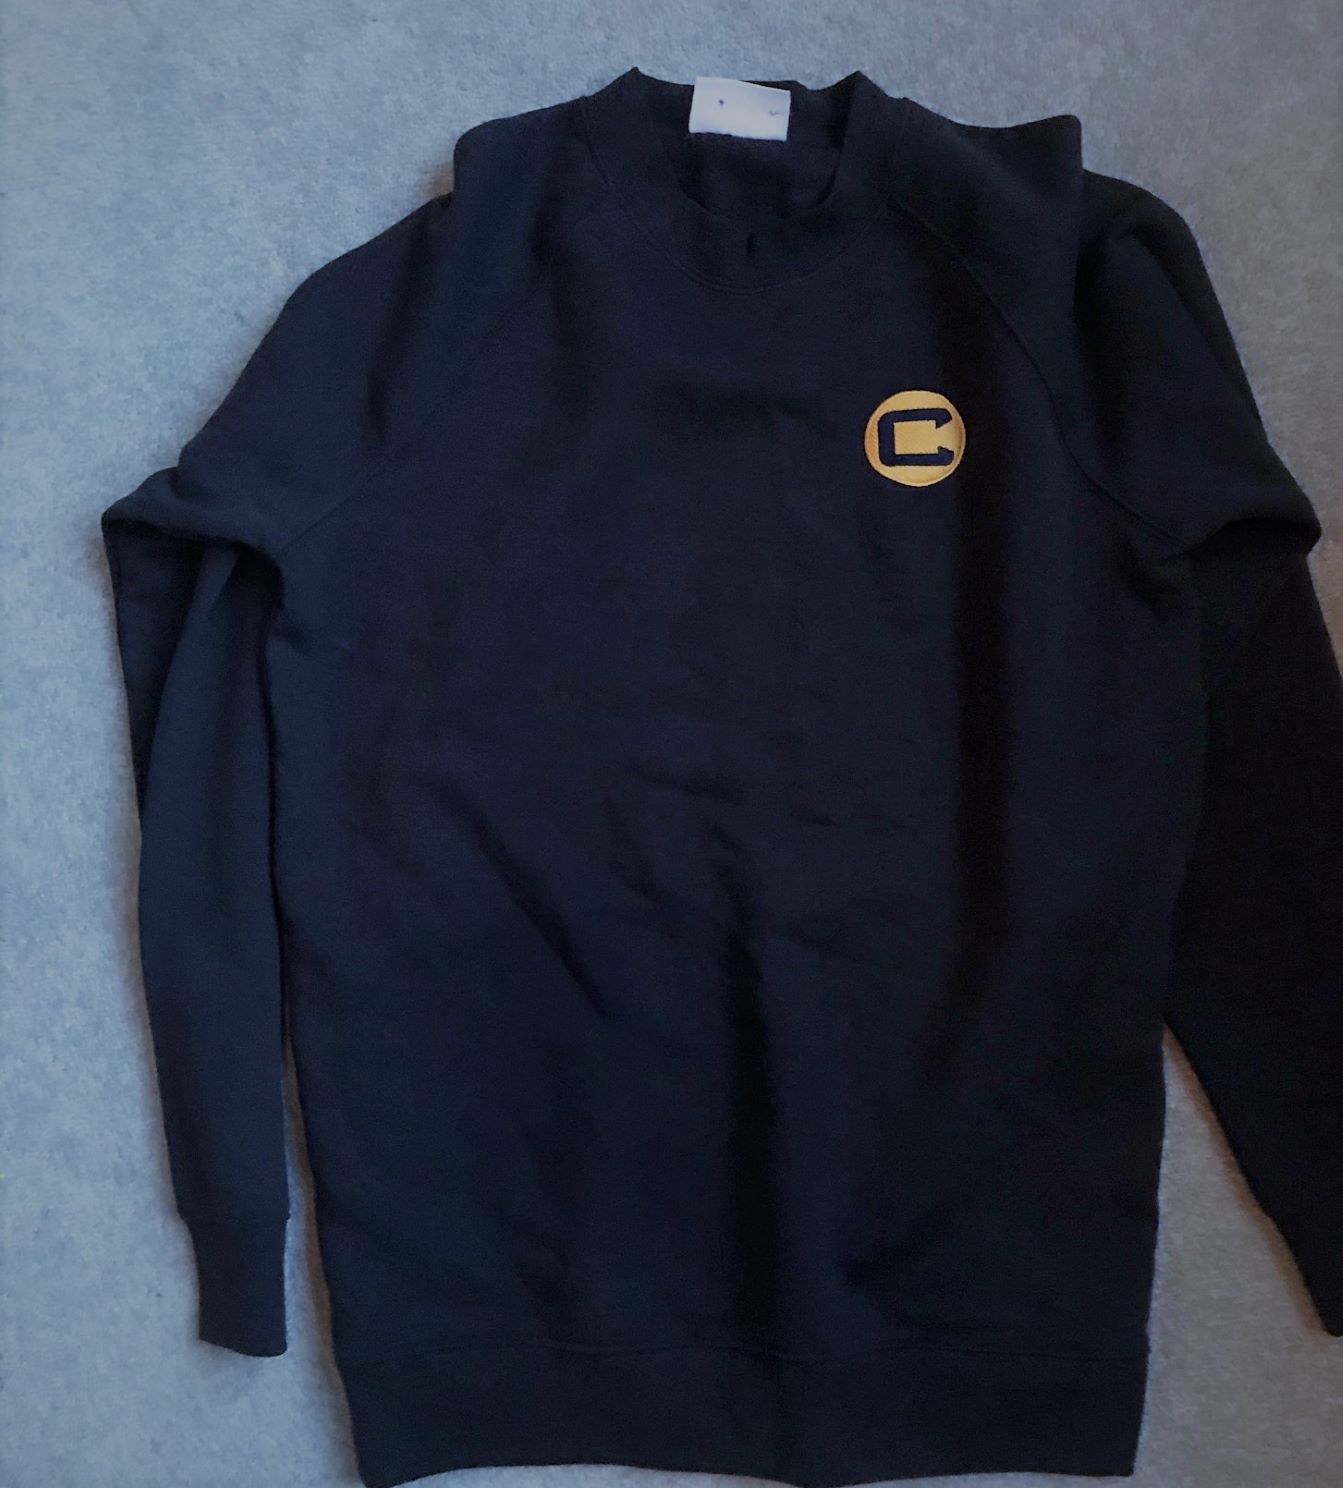 Charter North PE Jumper/ Sweatshirt size 11-12